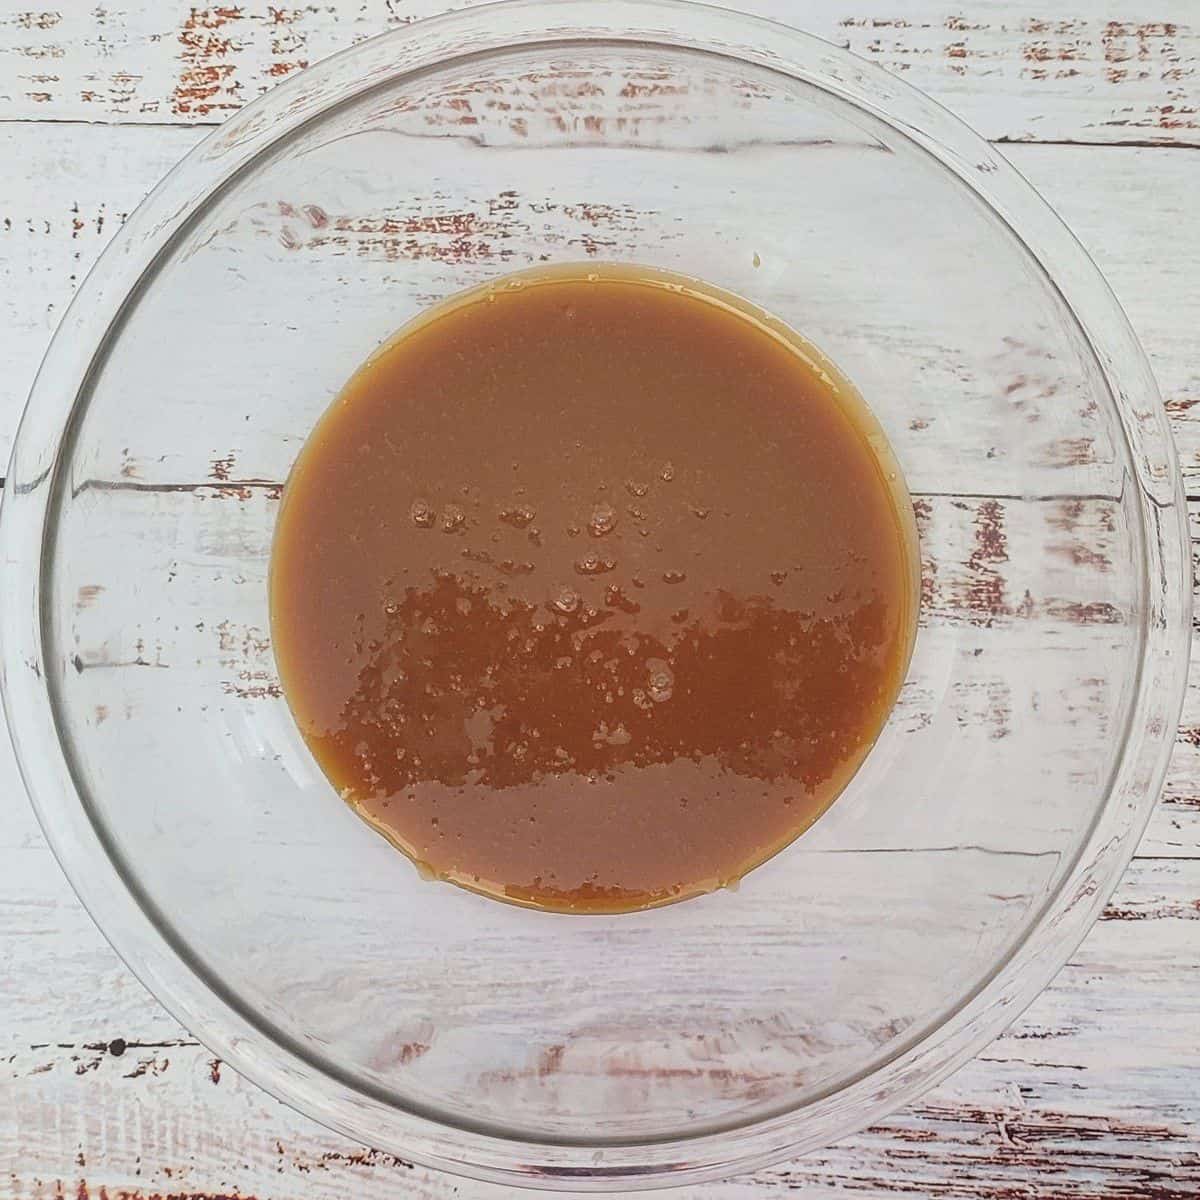 Cooling caramel in bowl